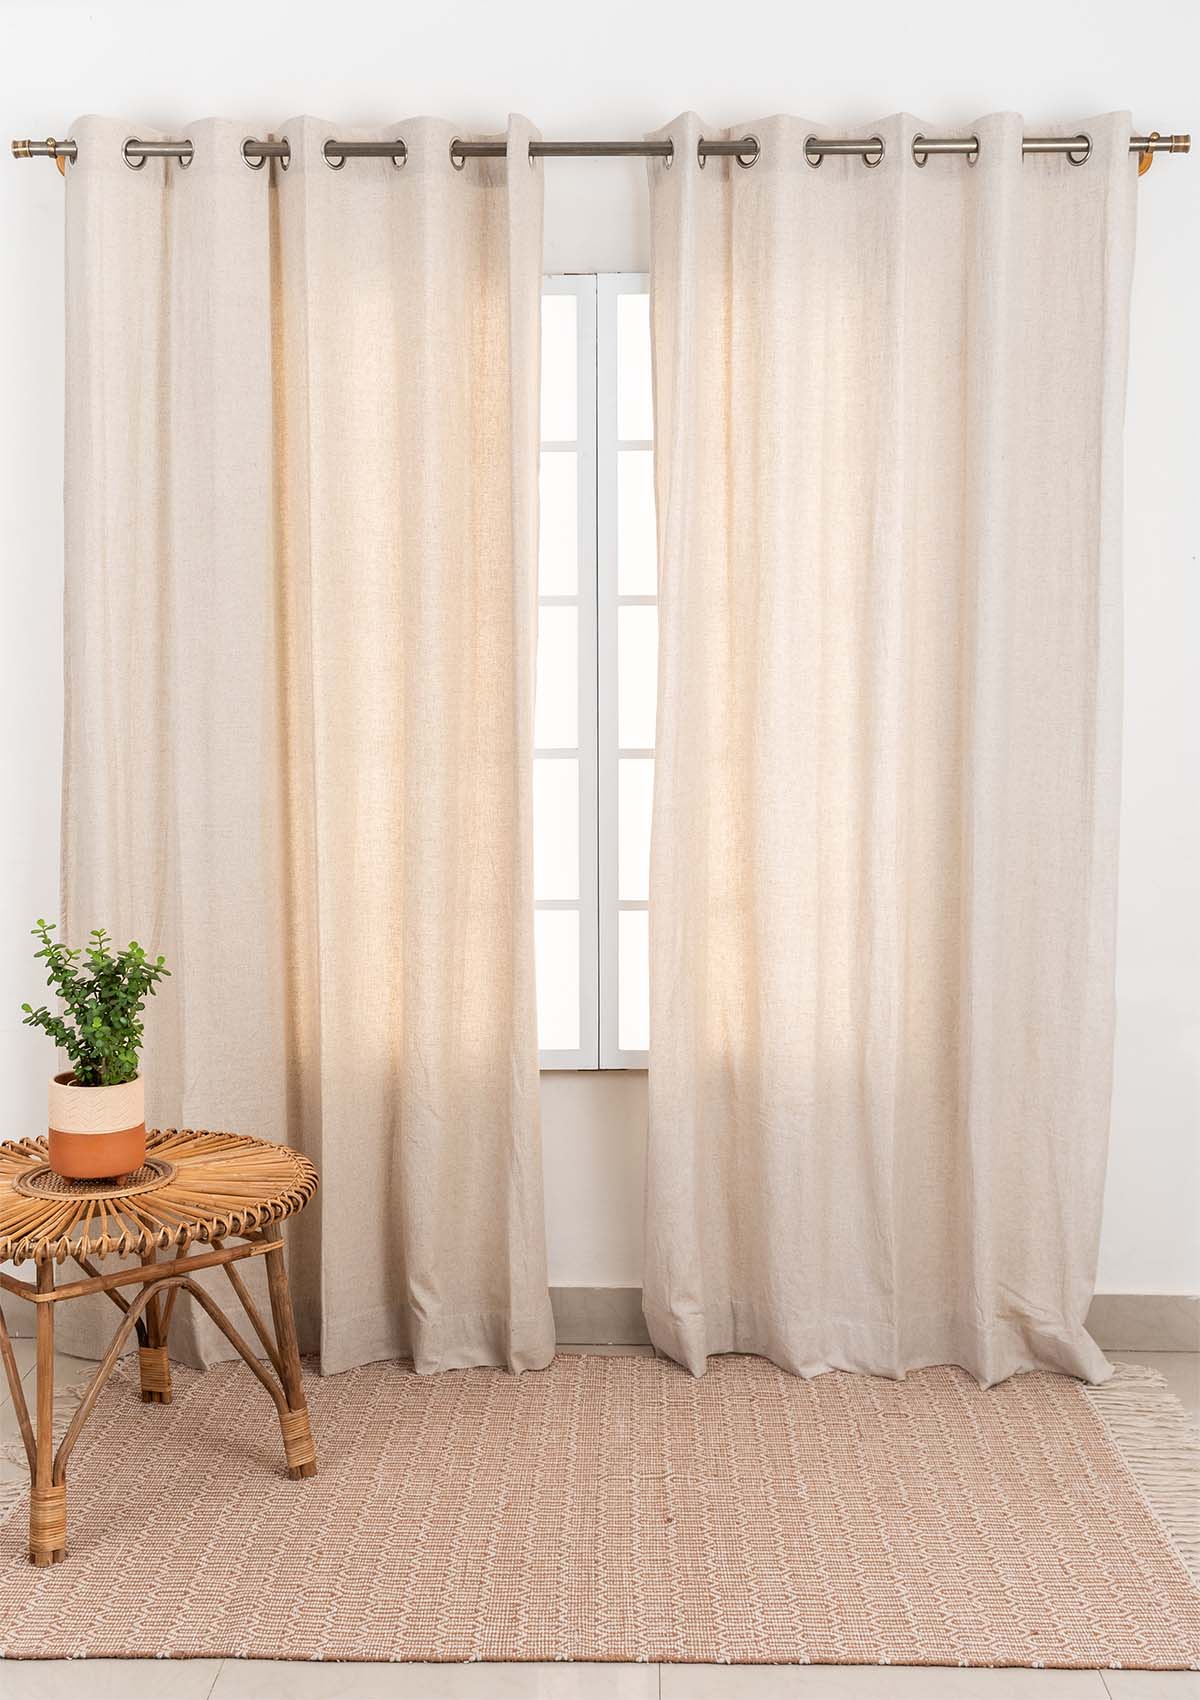 Solid linen beige 100% cotton plain curtain for bedroom - Room darkening - Pack of 1